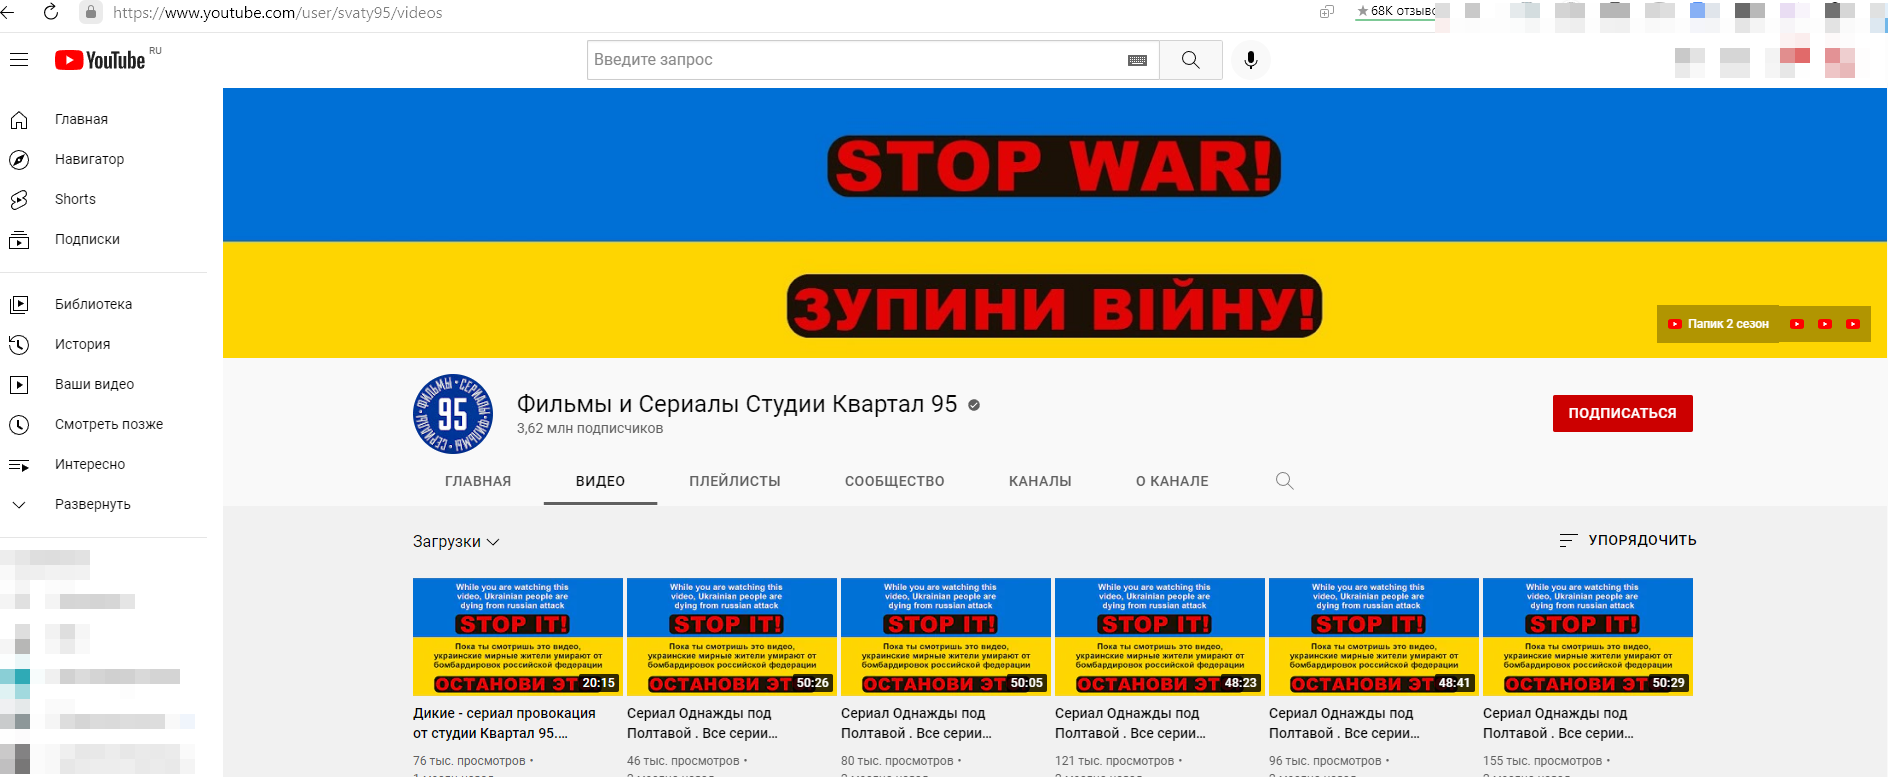 Ukraine Youtube Channels